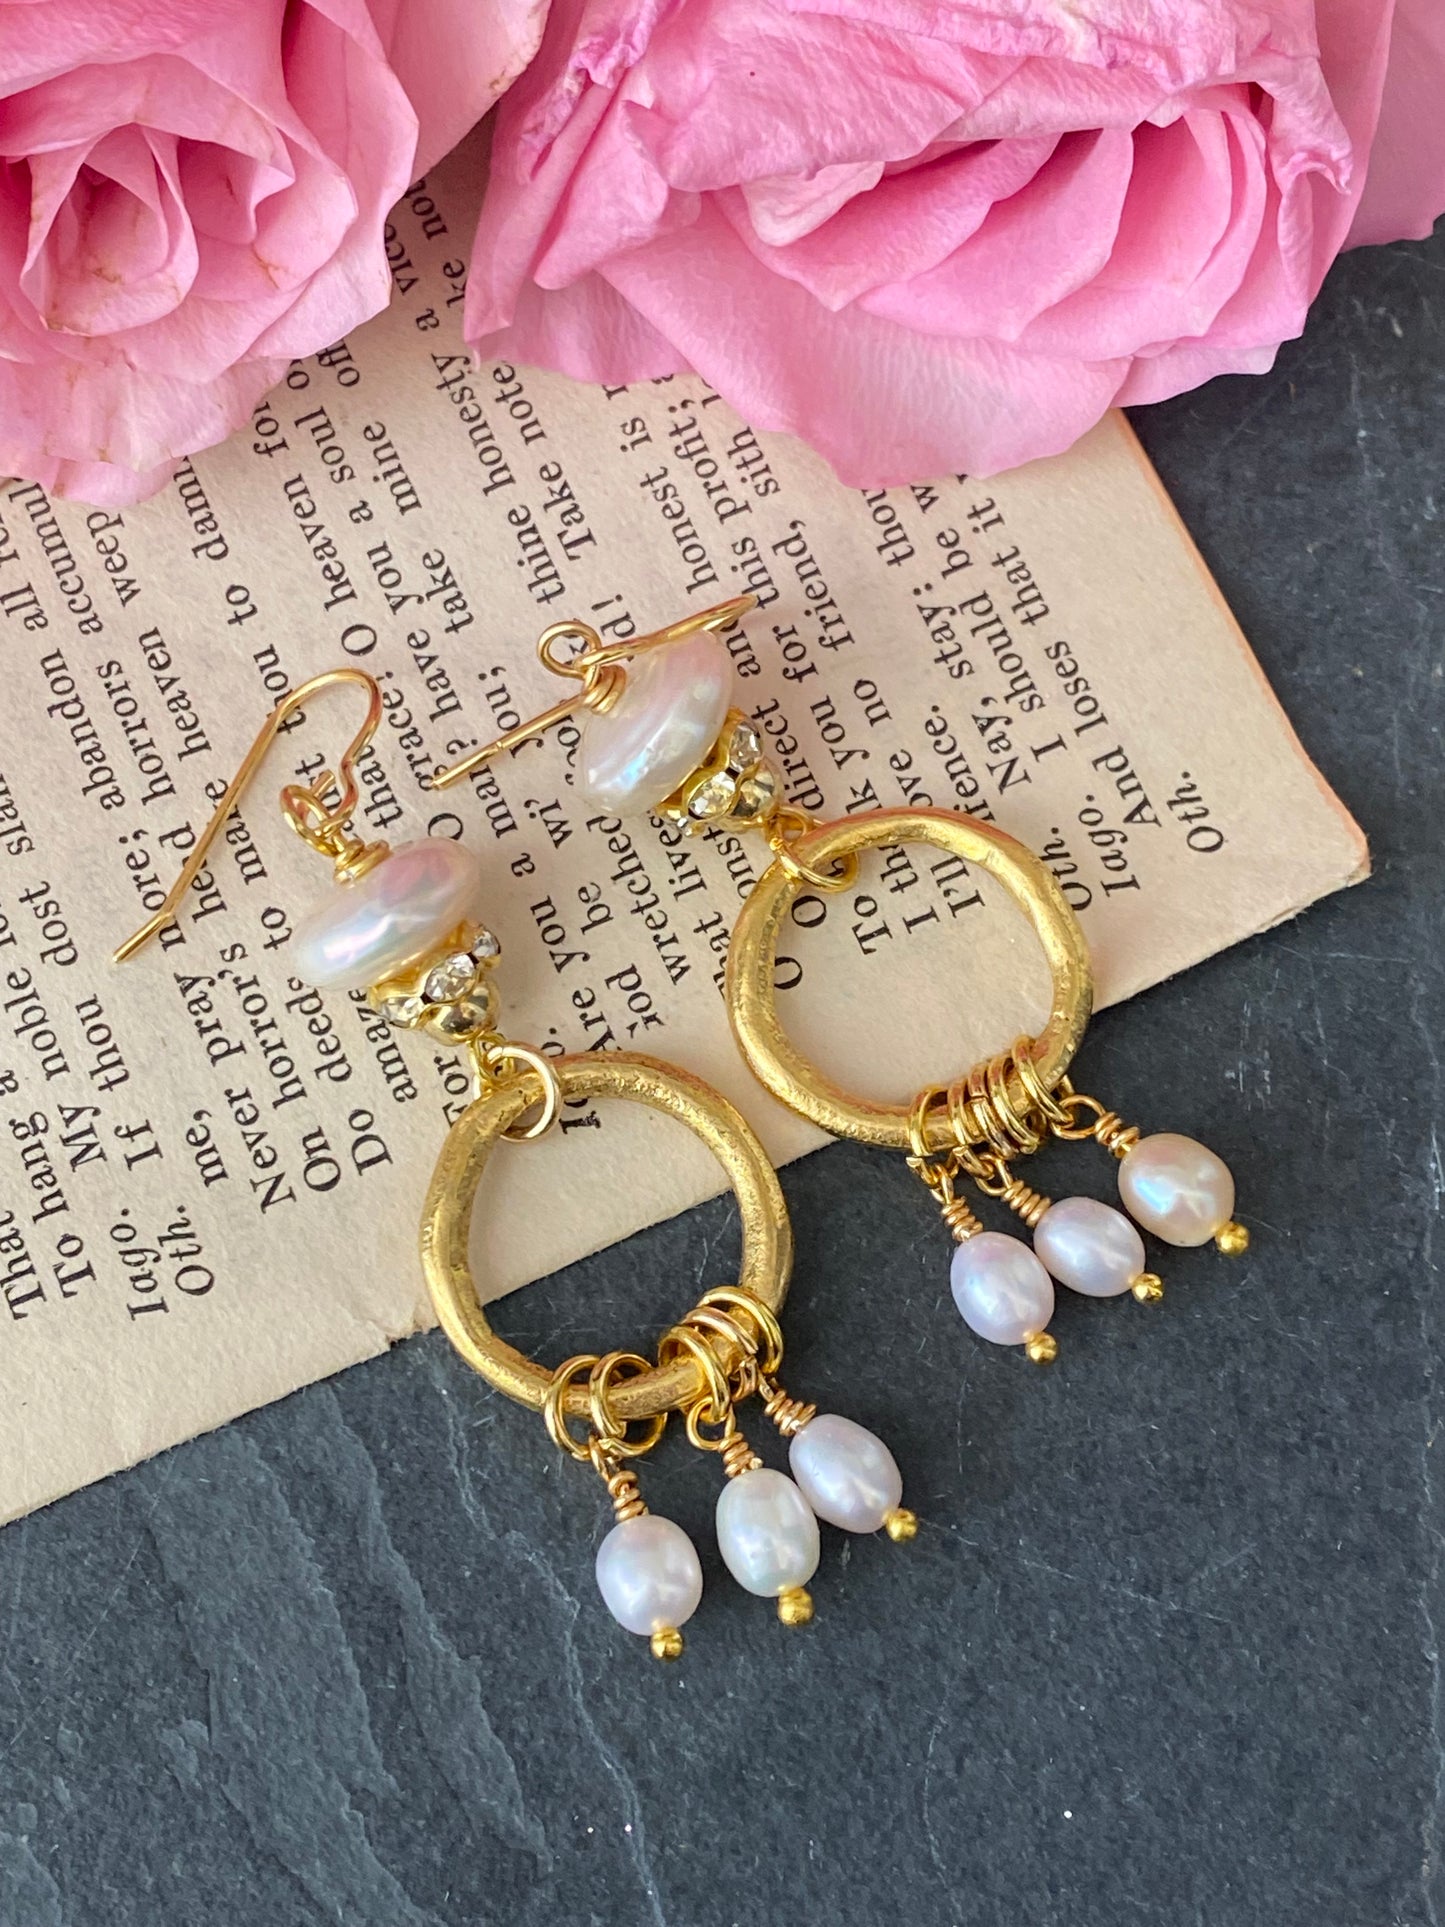 Pearls and gold metal, earrings.